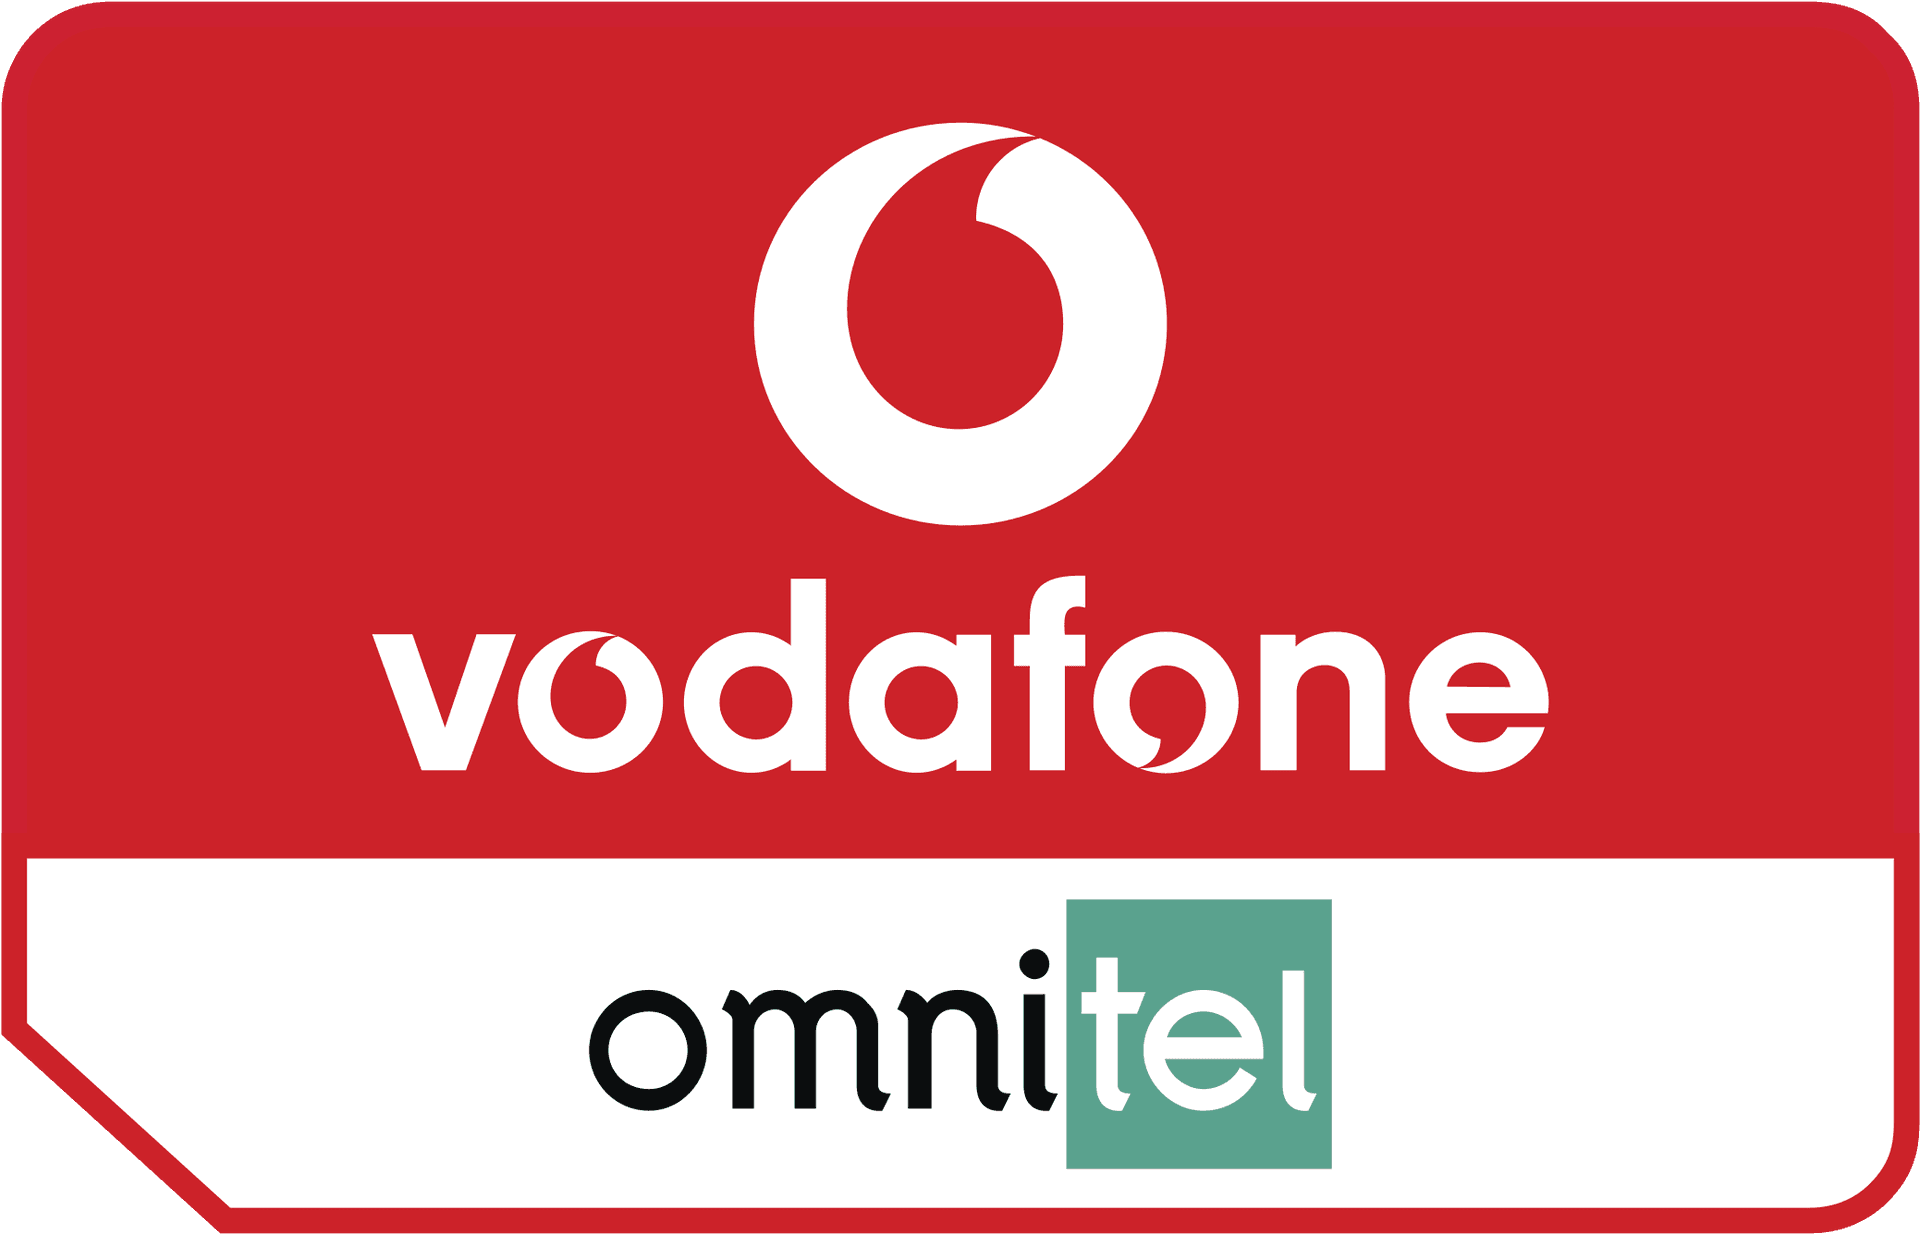 Vodafone Omnitel Branding PNG image